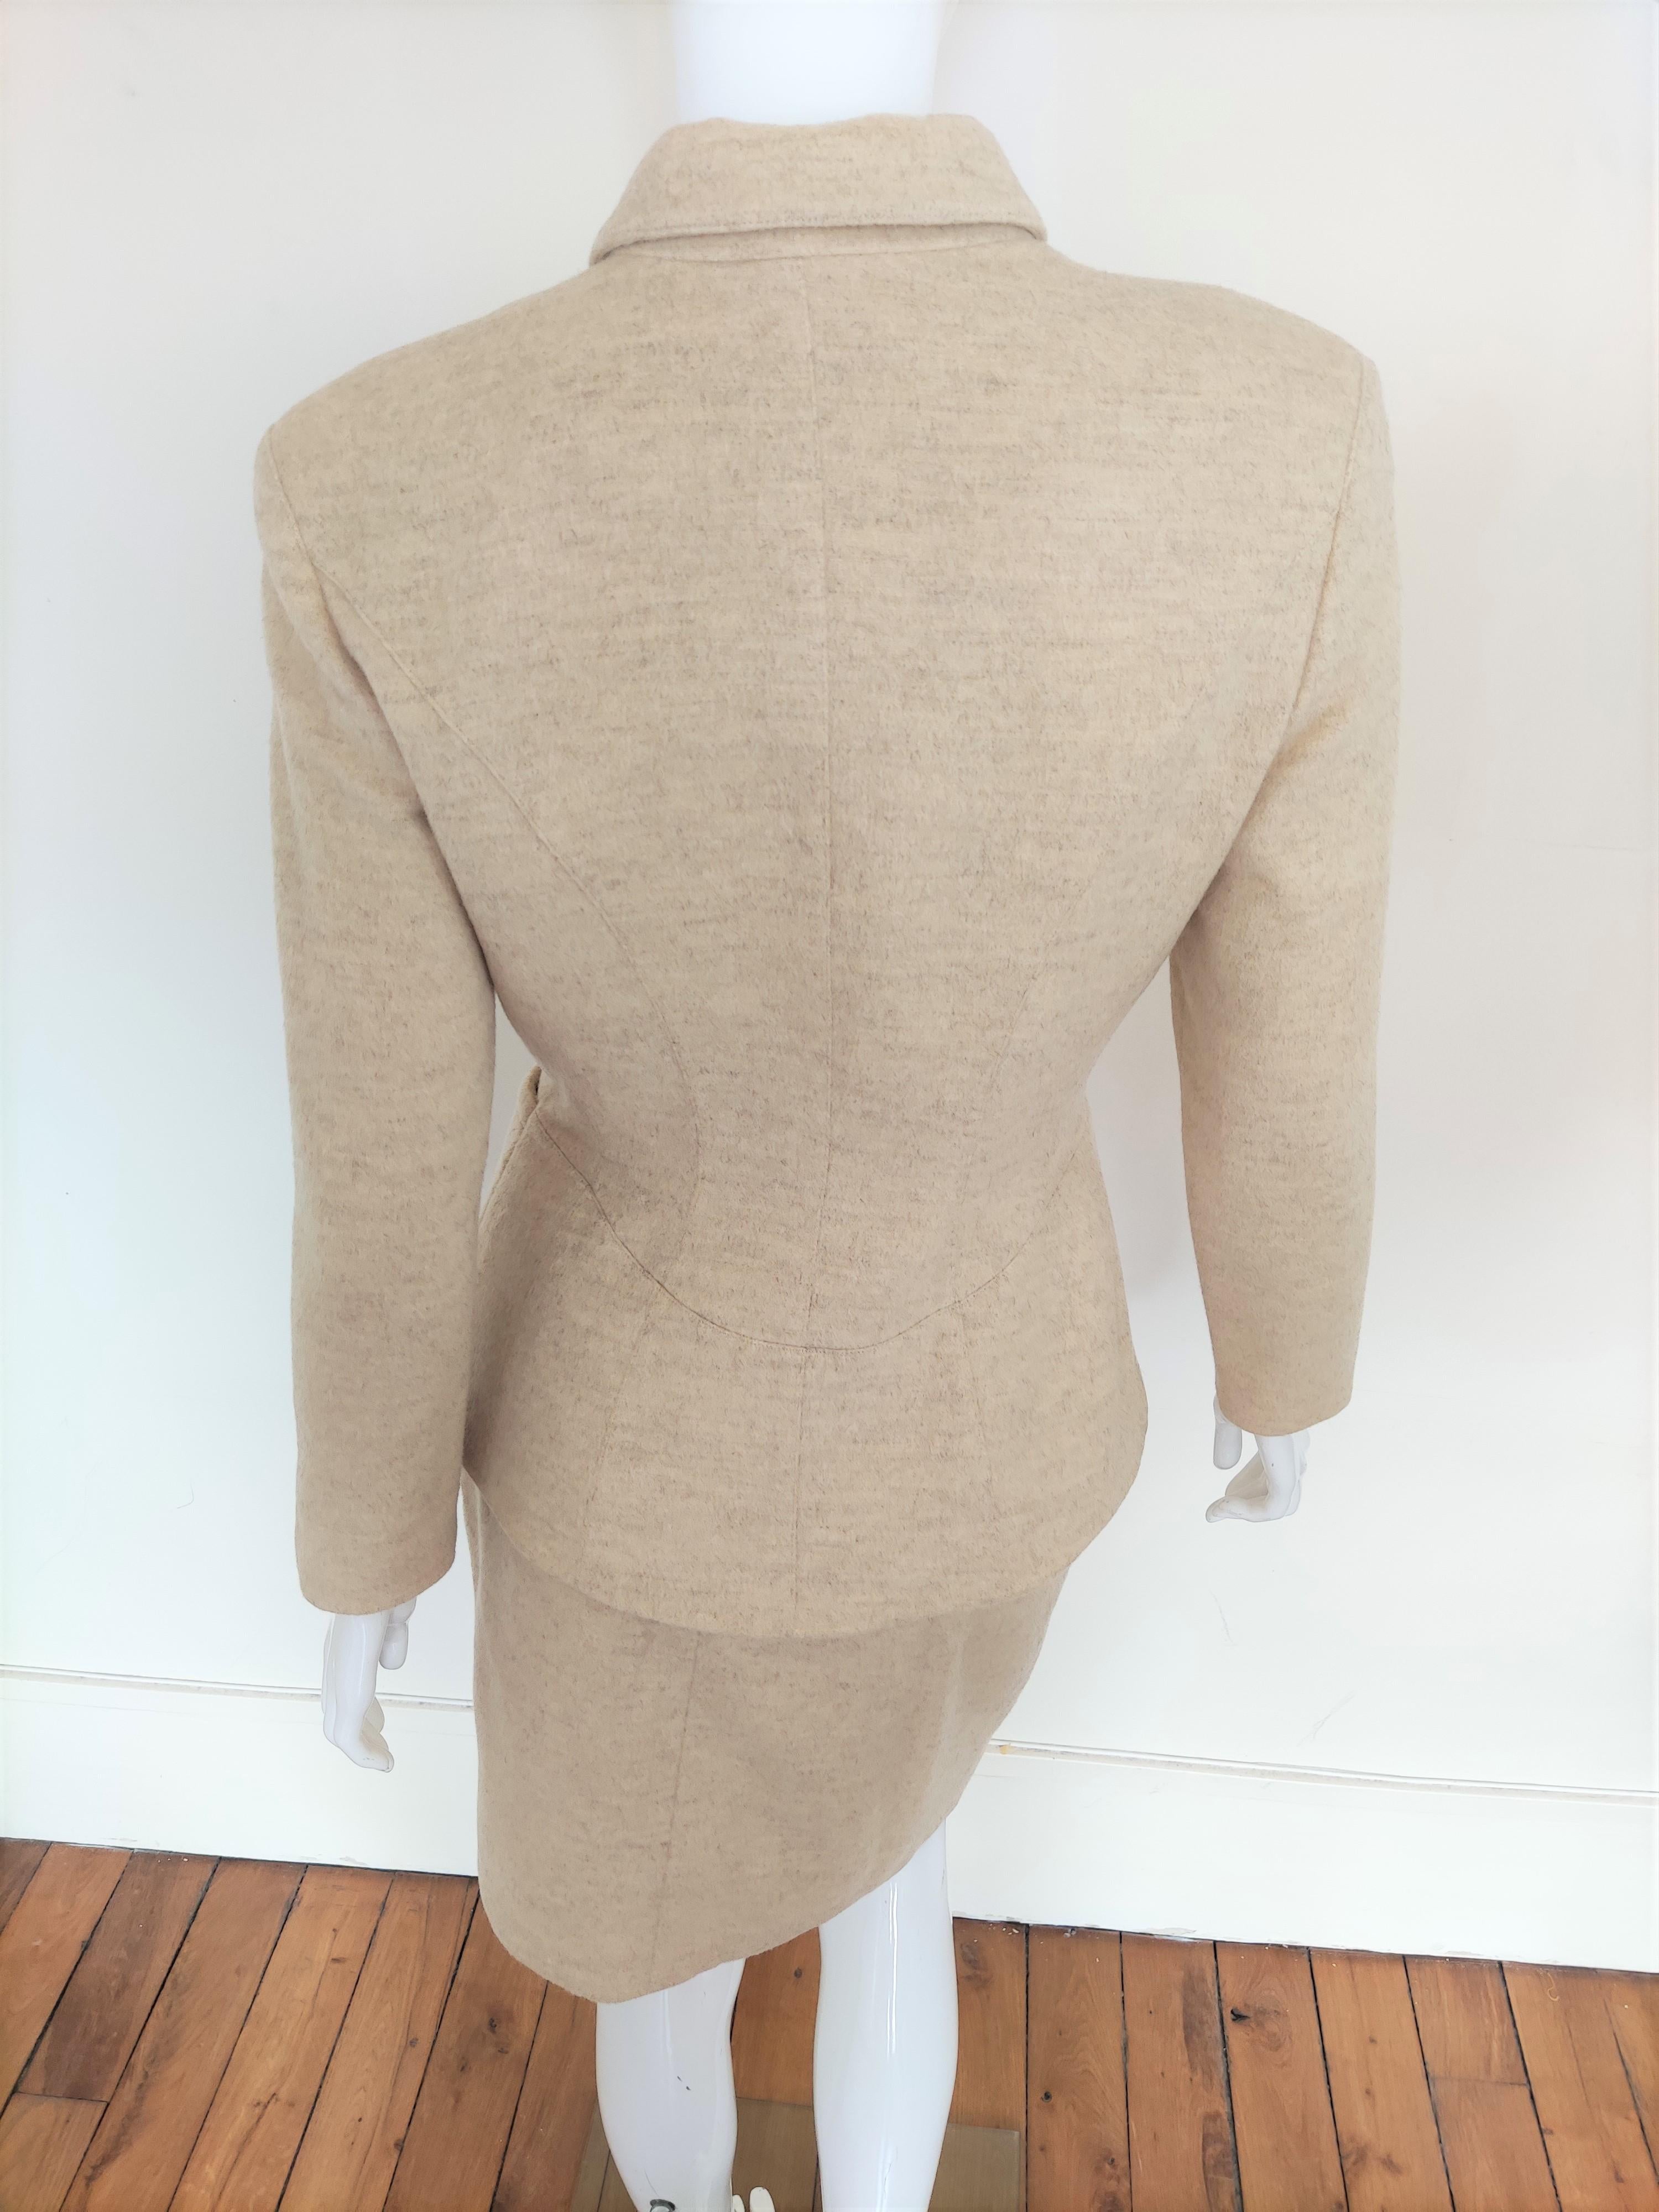 Thierry Mugler Rabbit Fur Cream White Wasp Waist Couture Medium Ensemble Suit For Sale 5